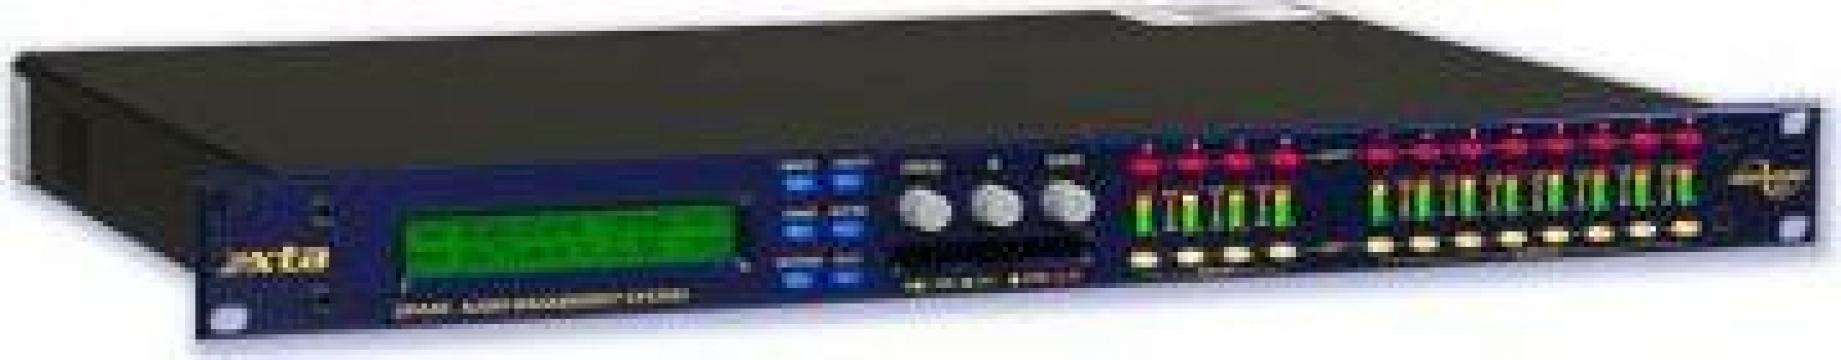 Procesor sunet digital DP426 XTA de la Graffiti Pro Audio Srl